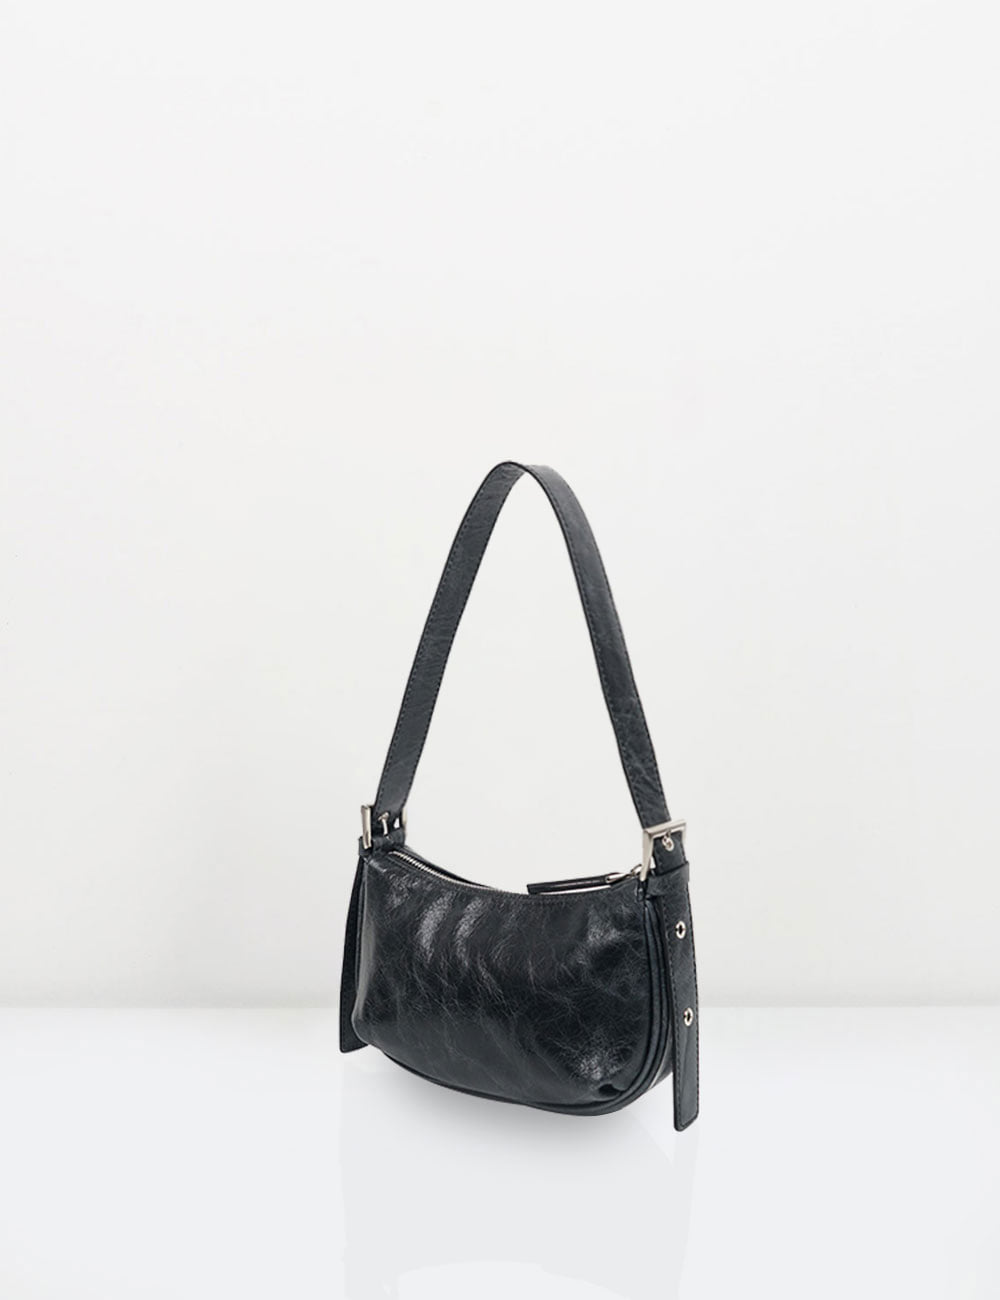 Milli bag / black